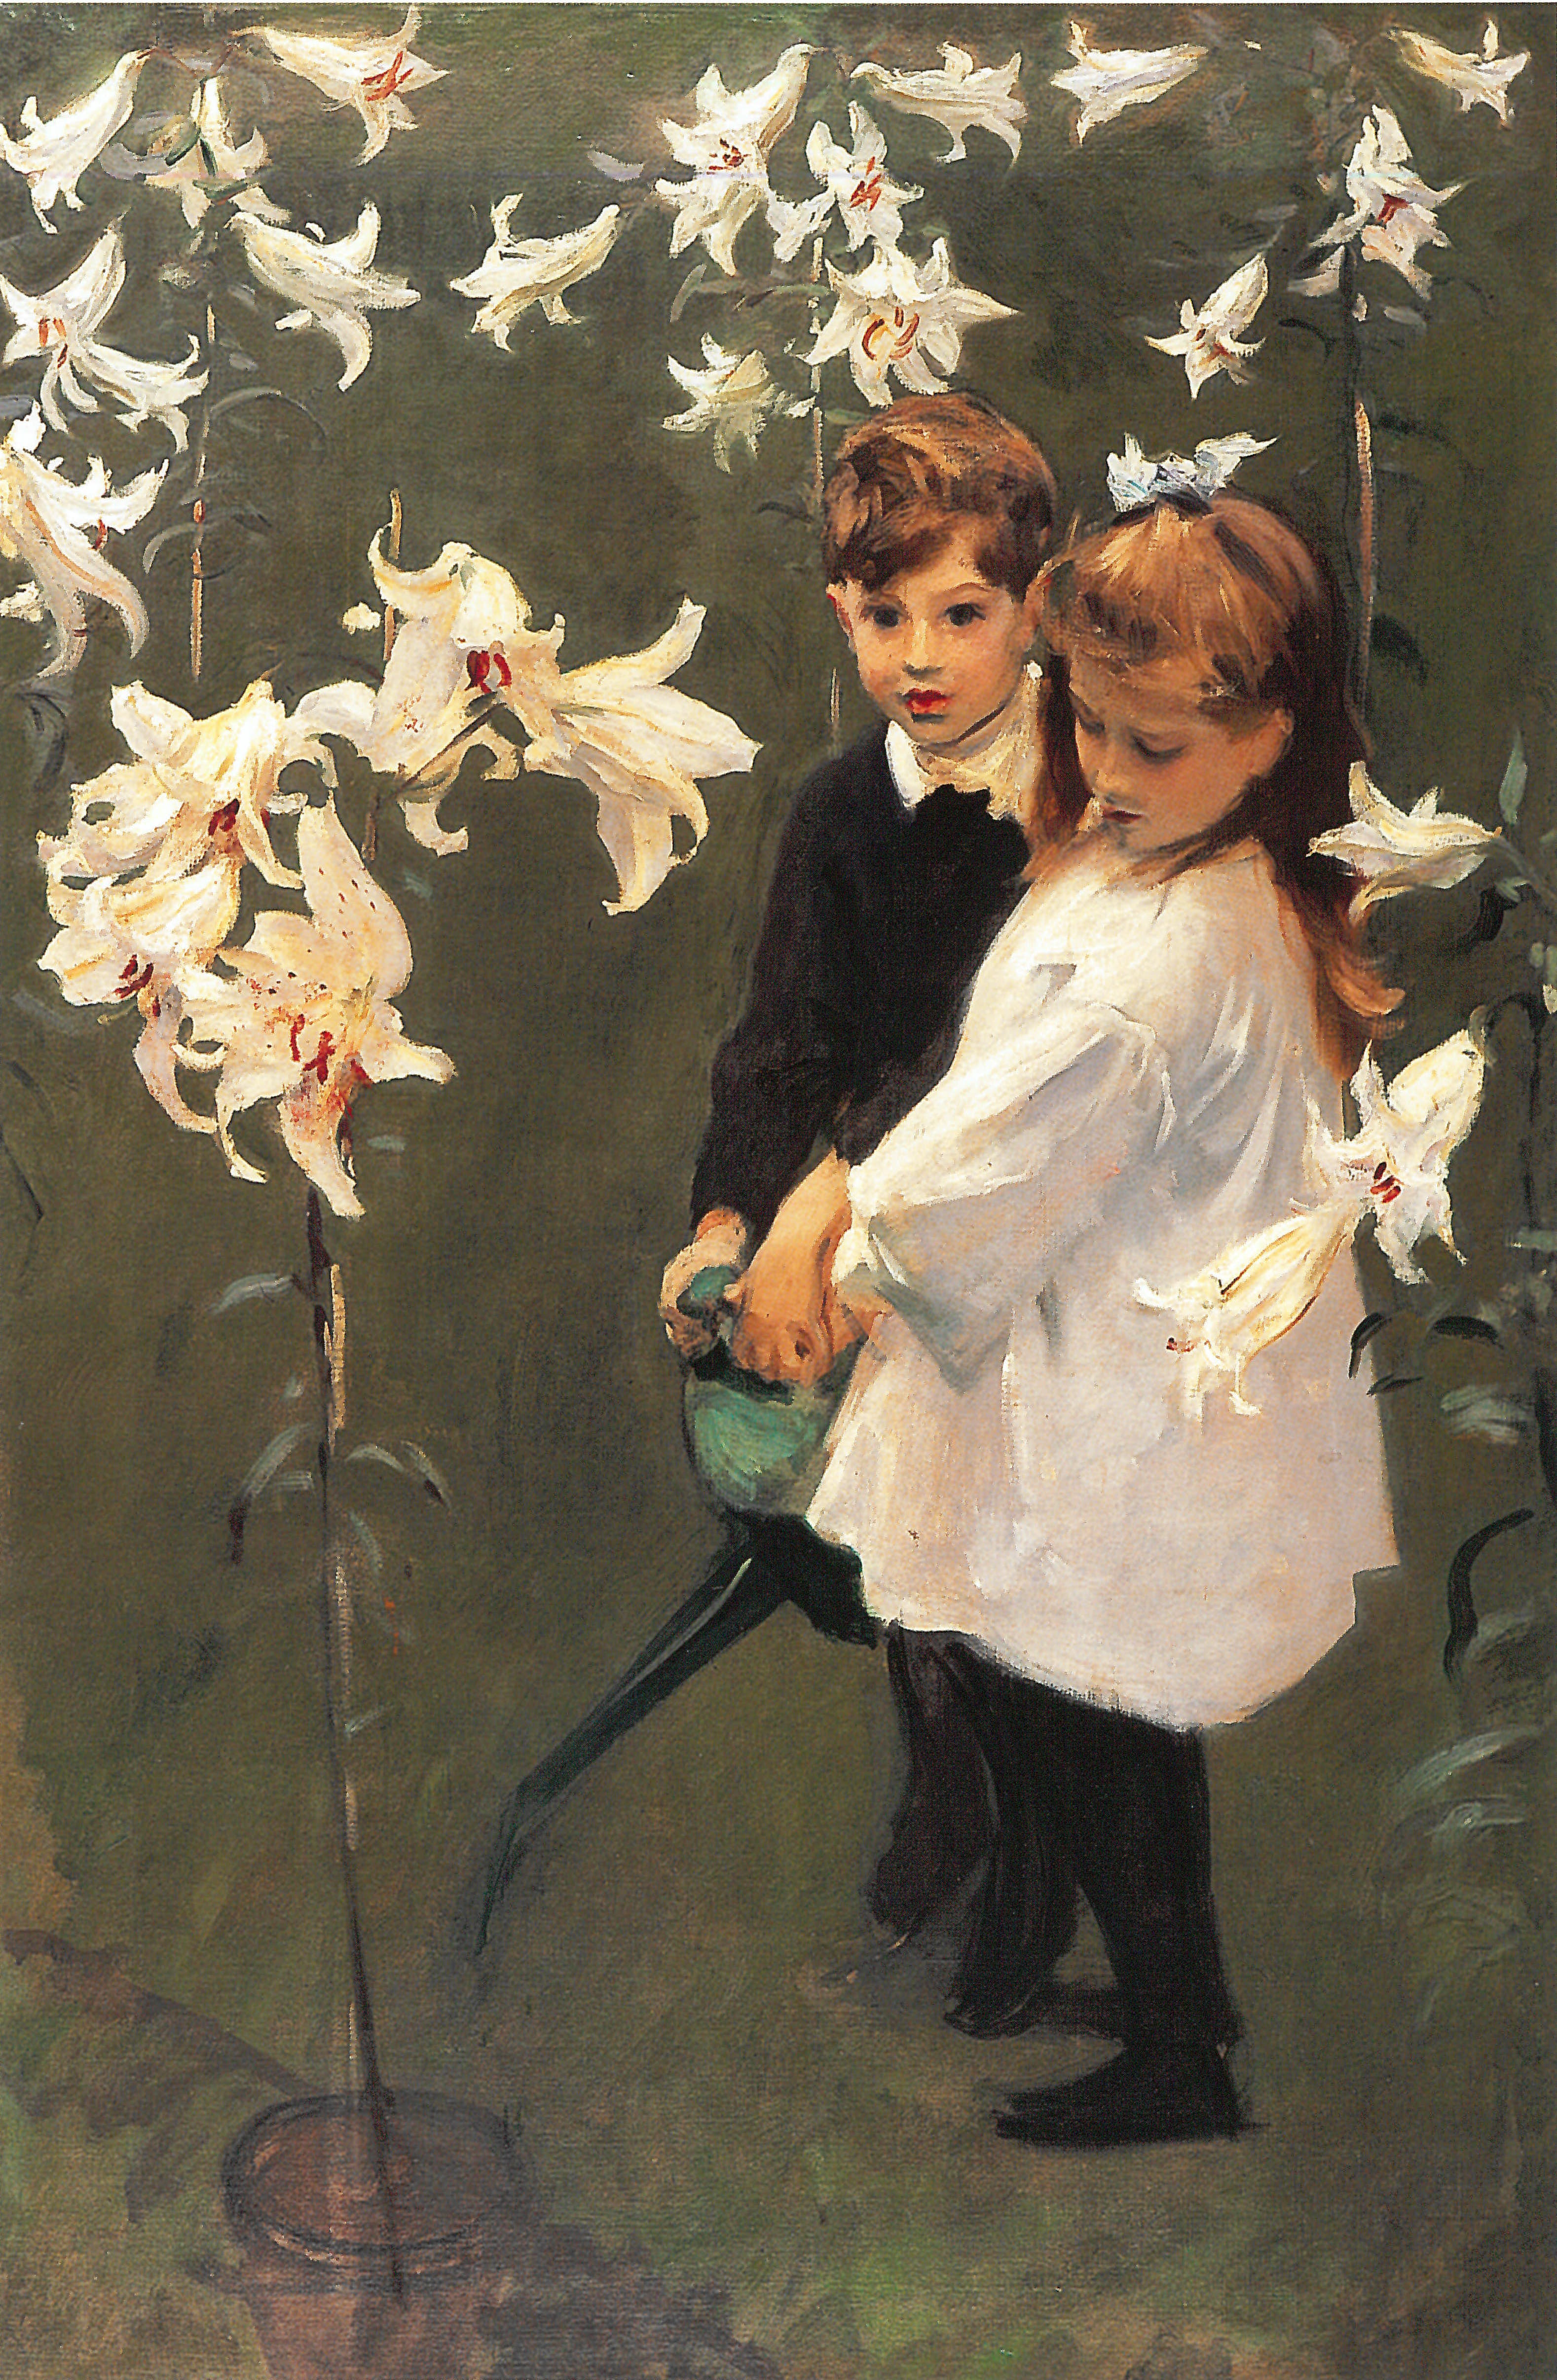 1884, oil on canvas, 137.8 x 91.9 cm